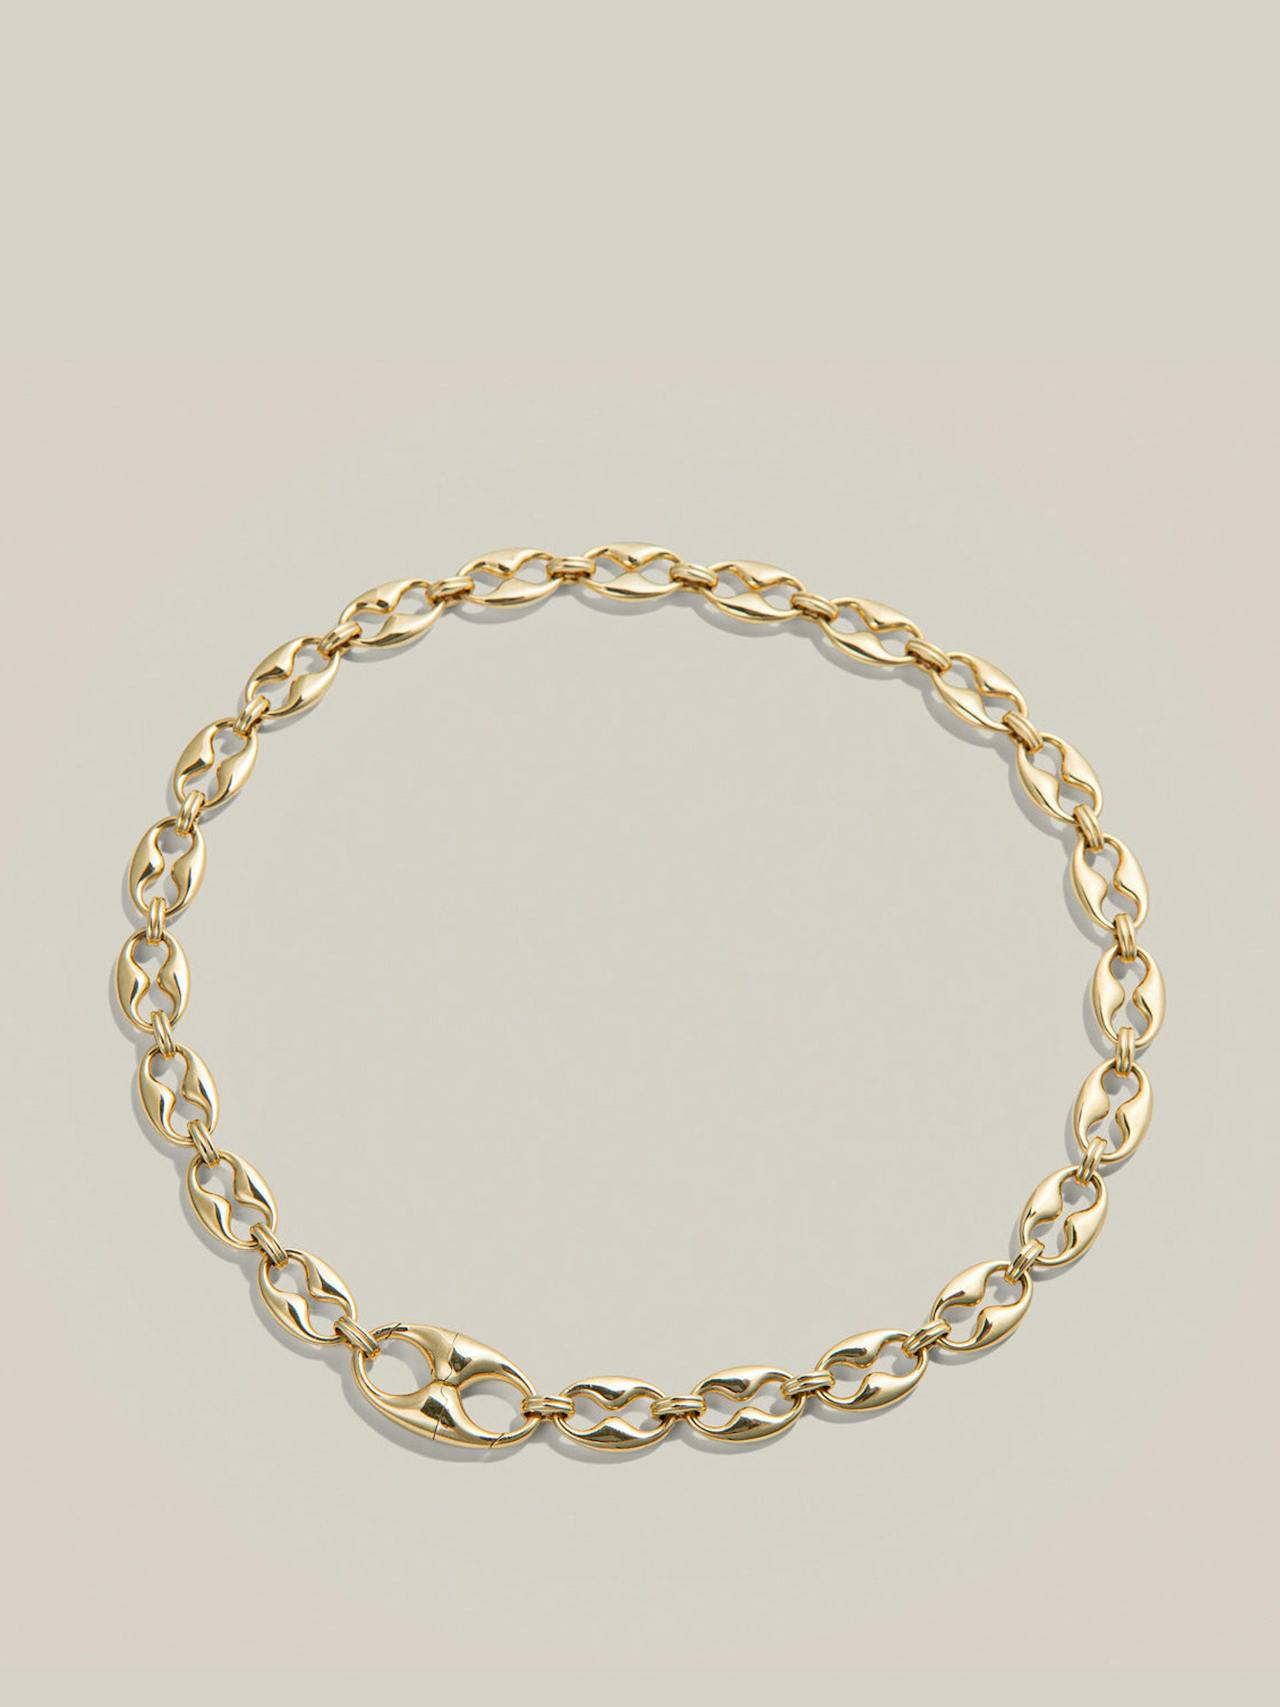 Persephone necklace